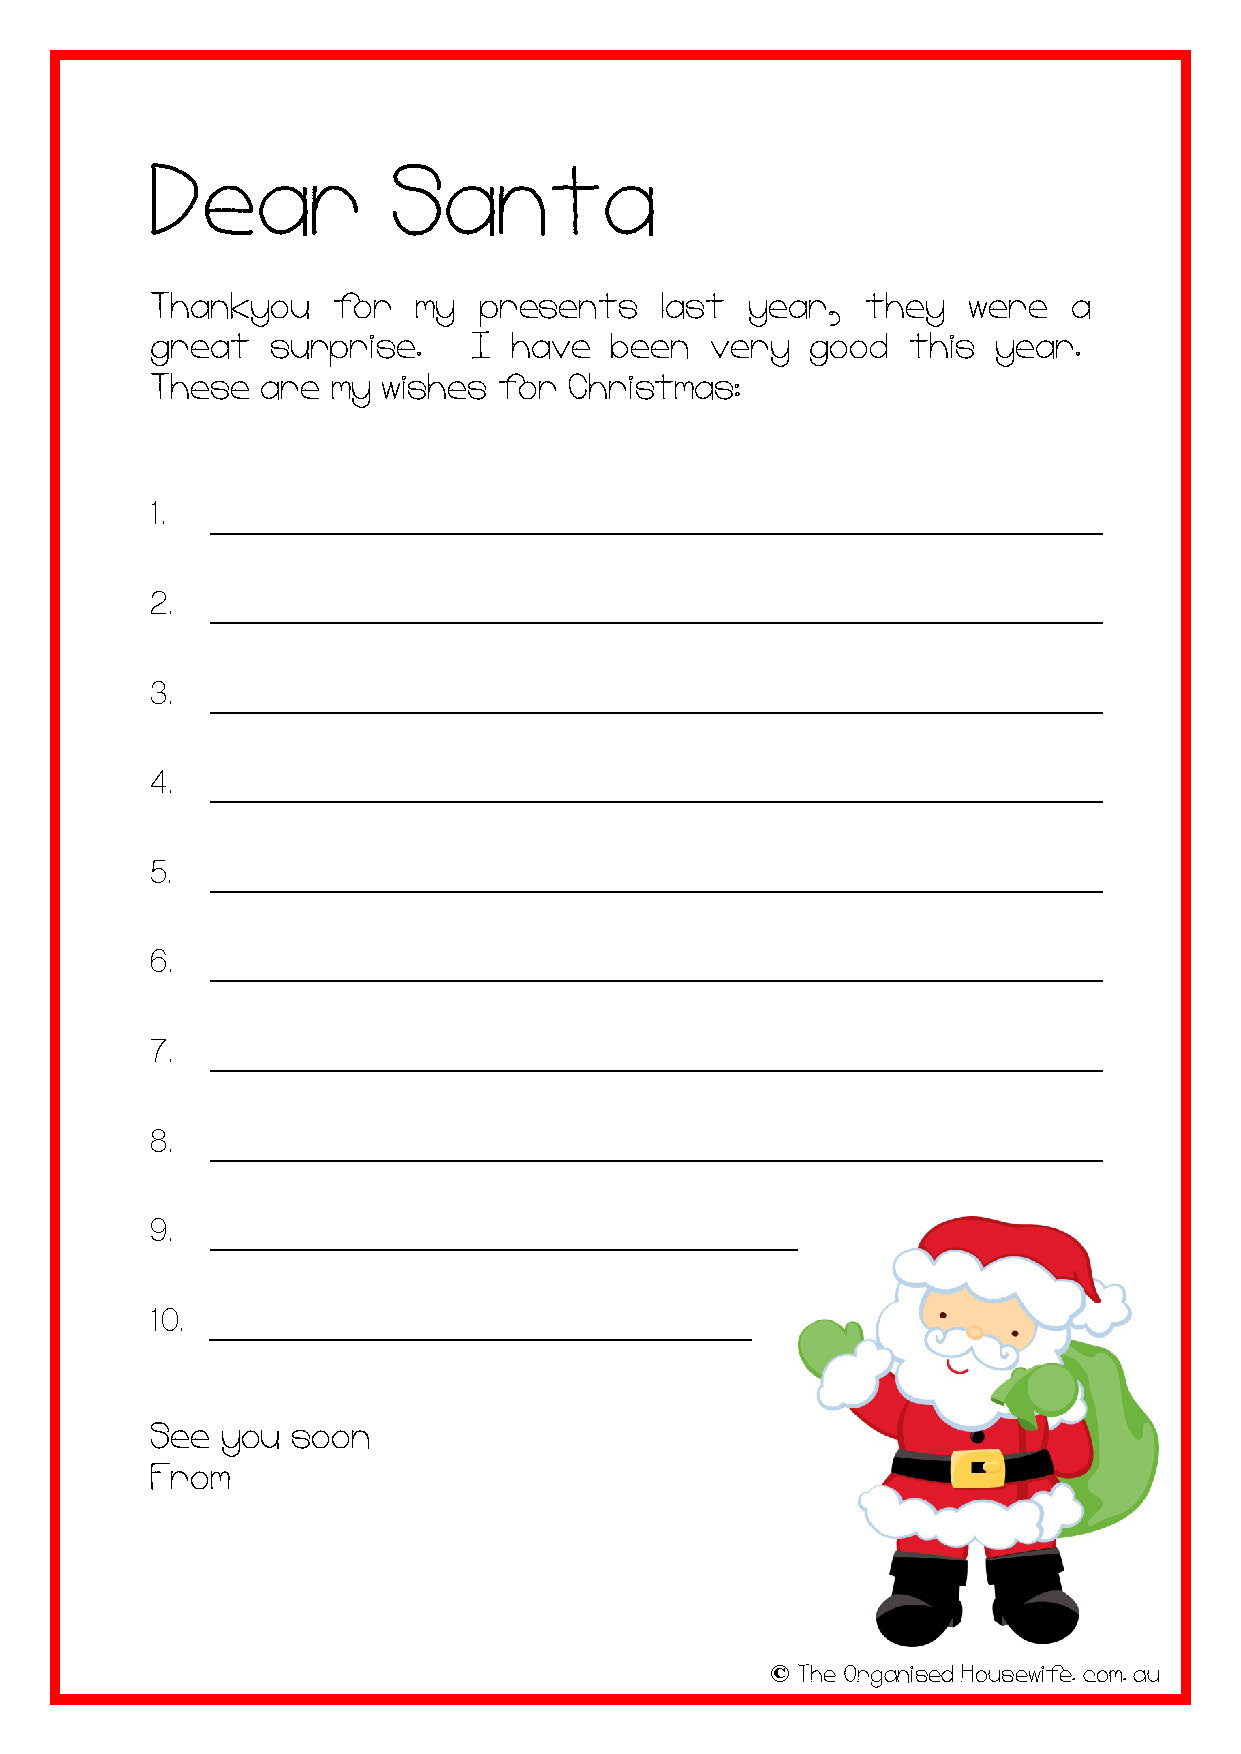 Dear Santa Free Printable Letters